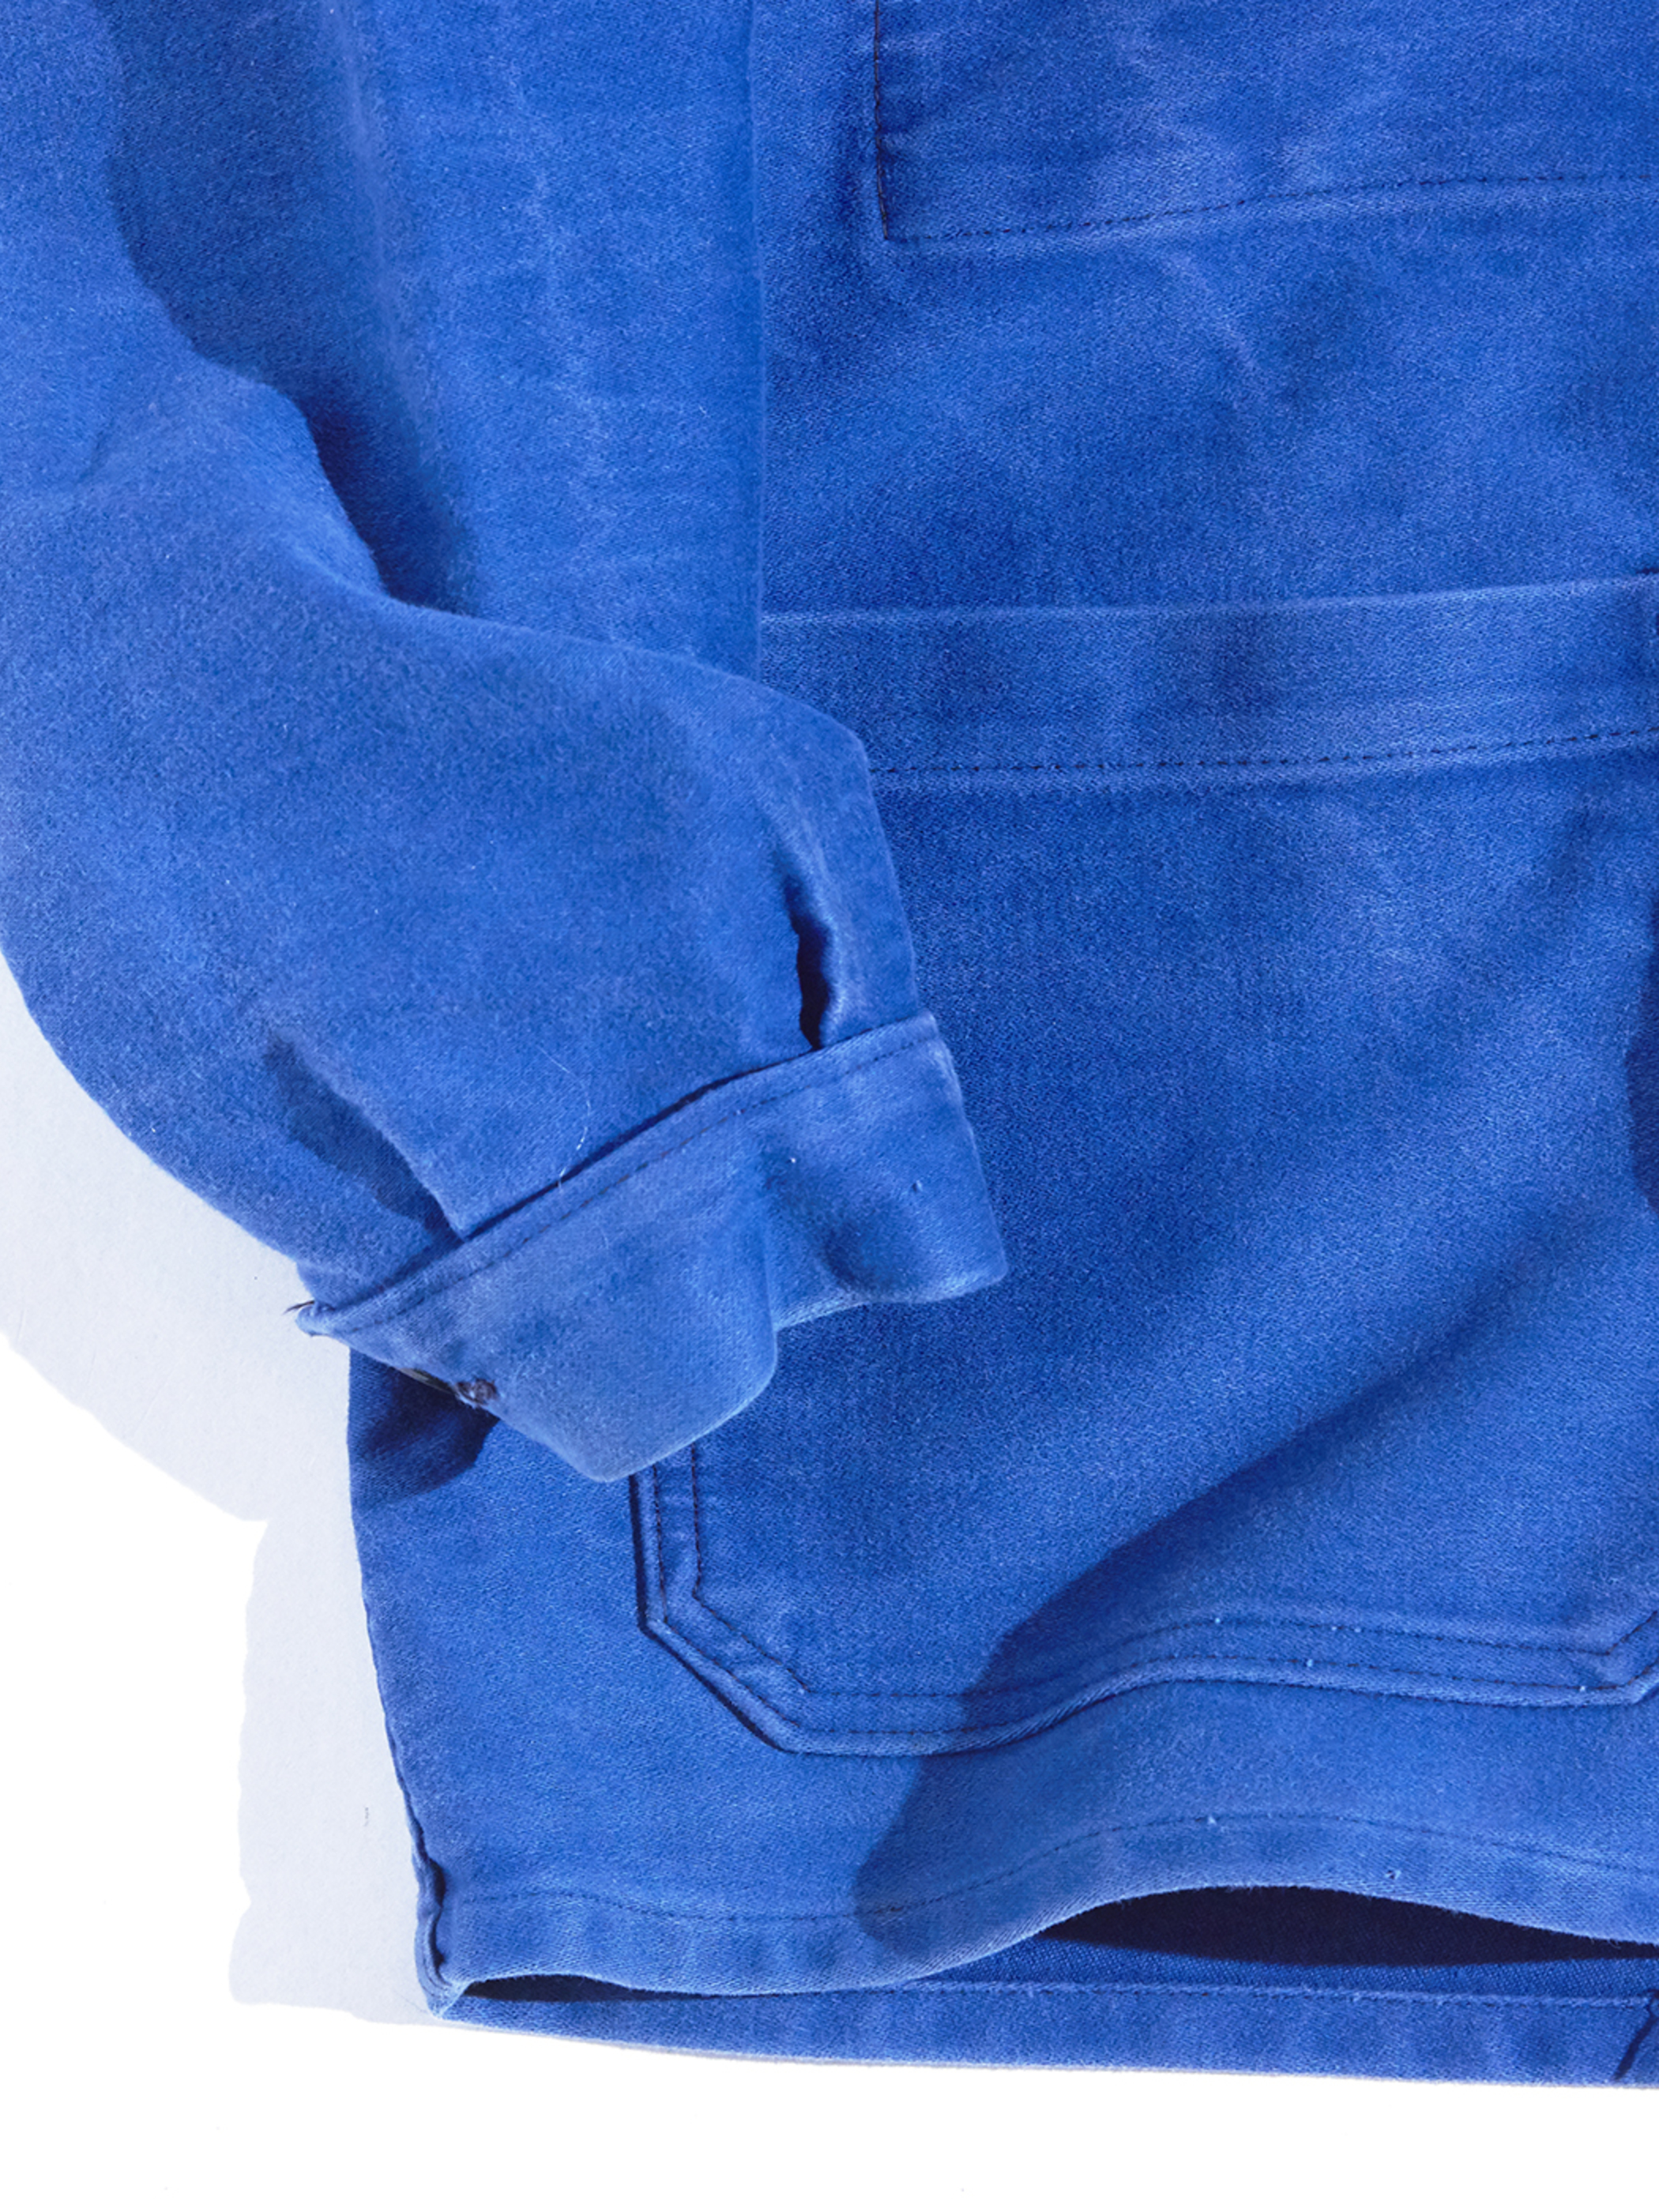 1960s "VETVOR" french moleskin work jacket -INK BLUE-